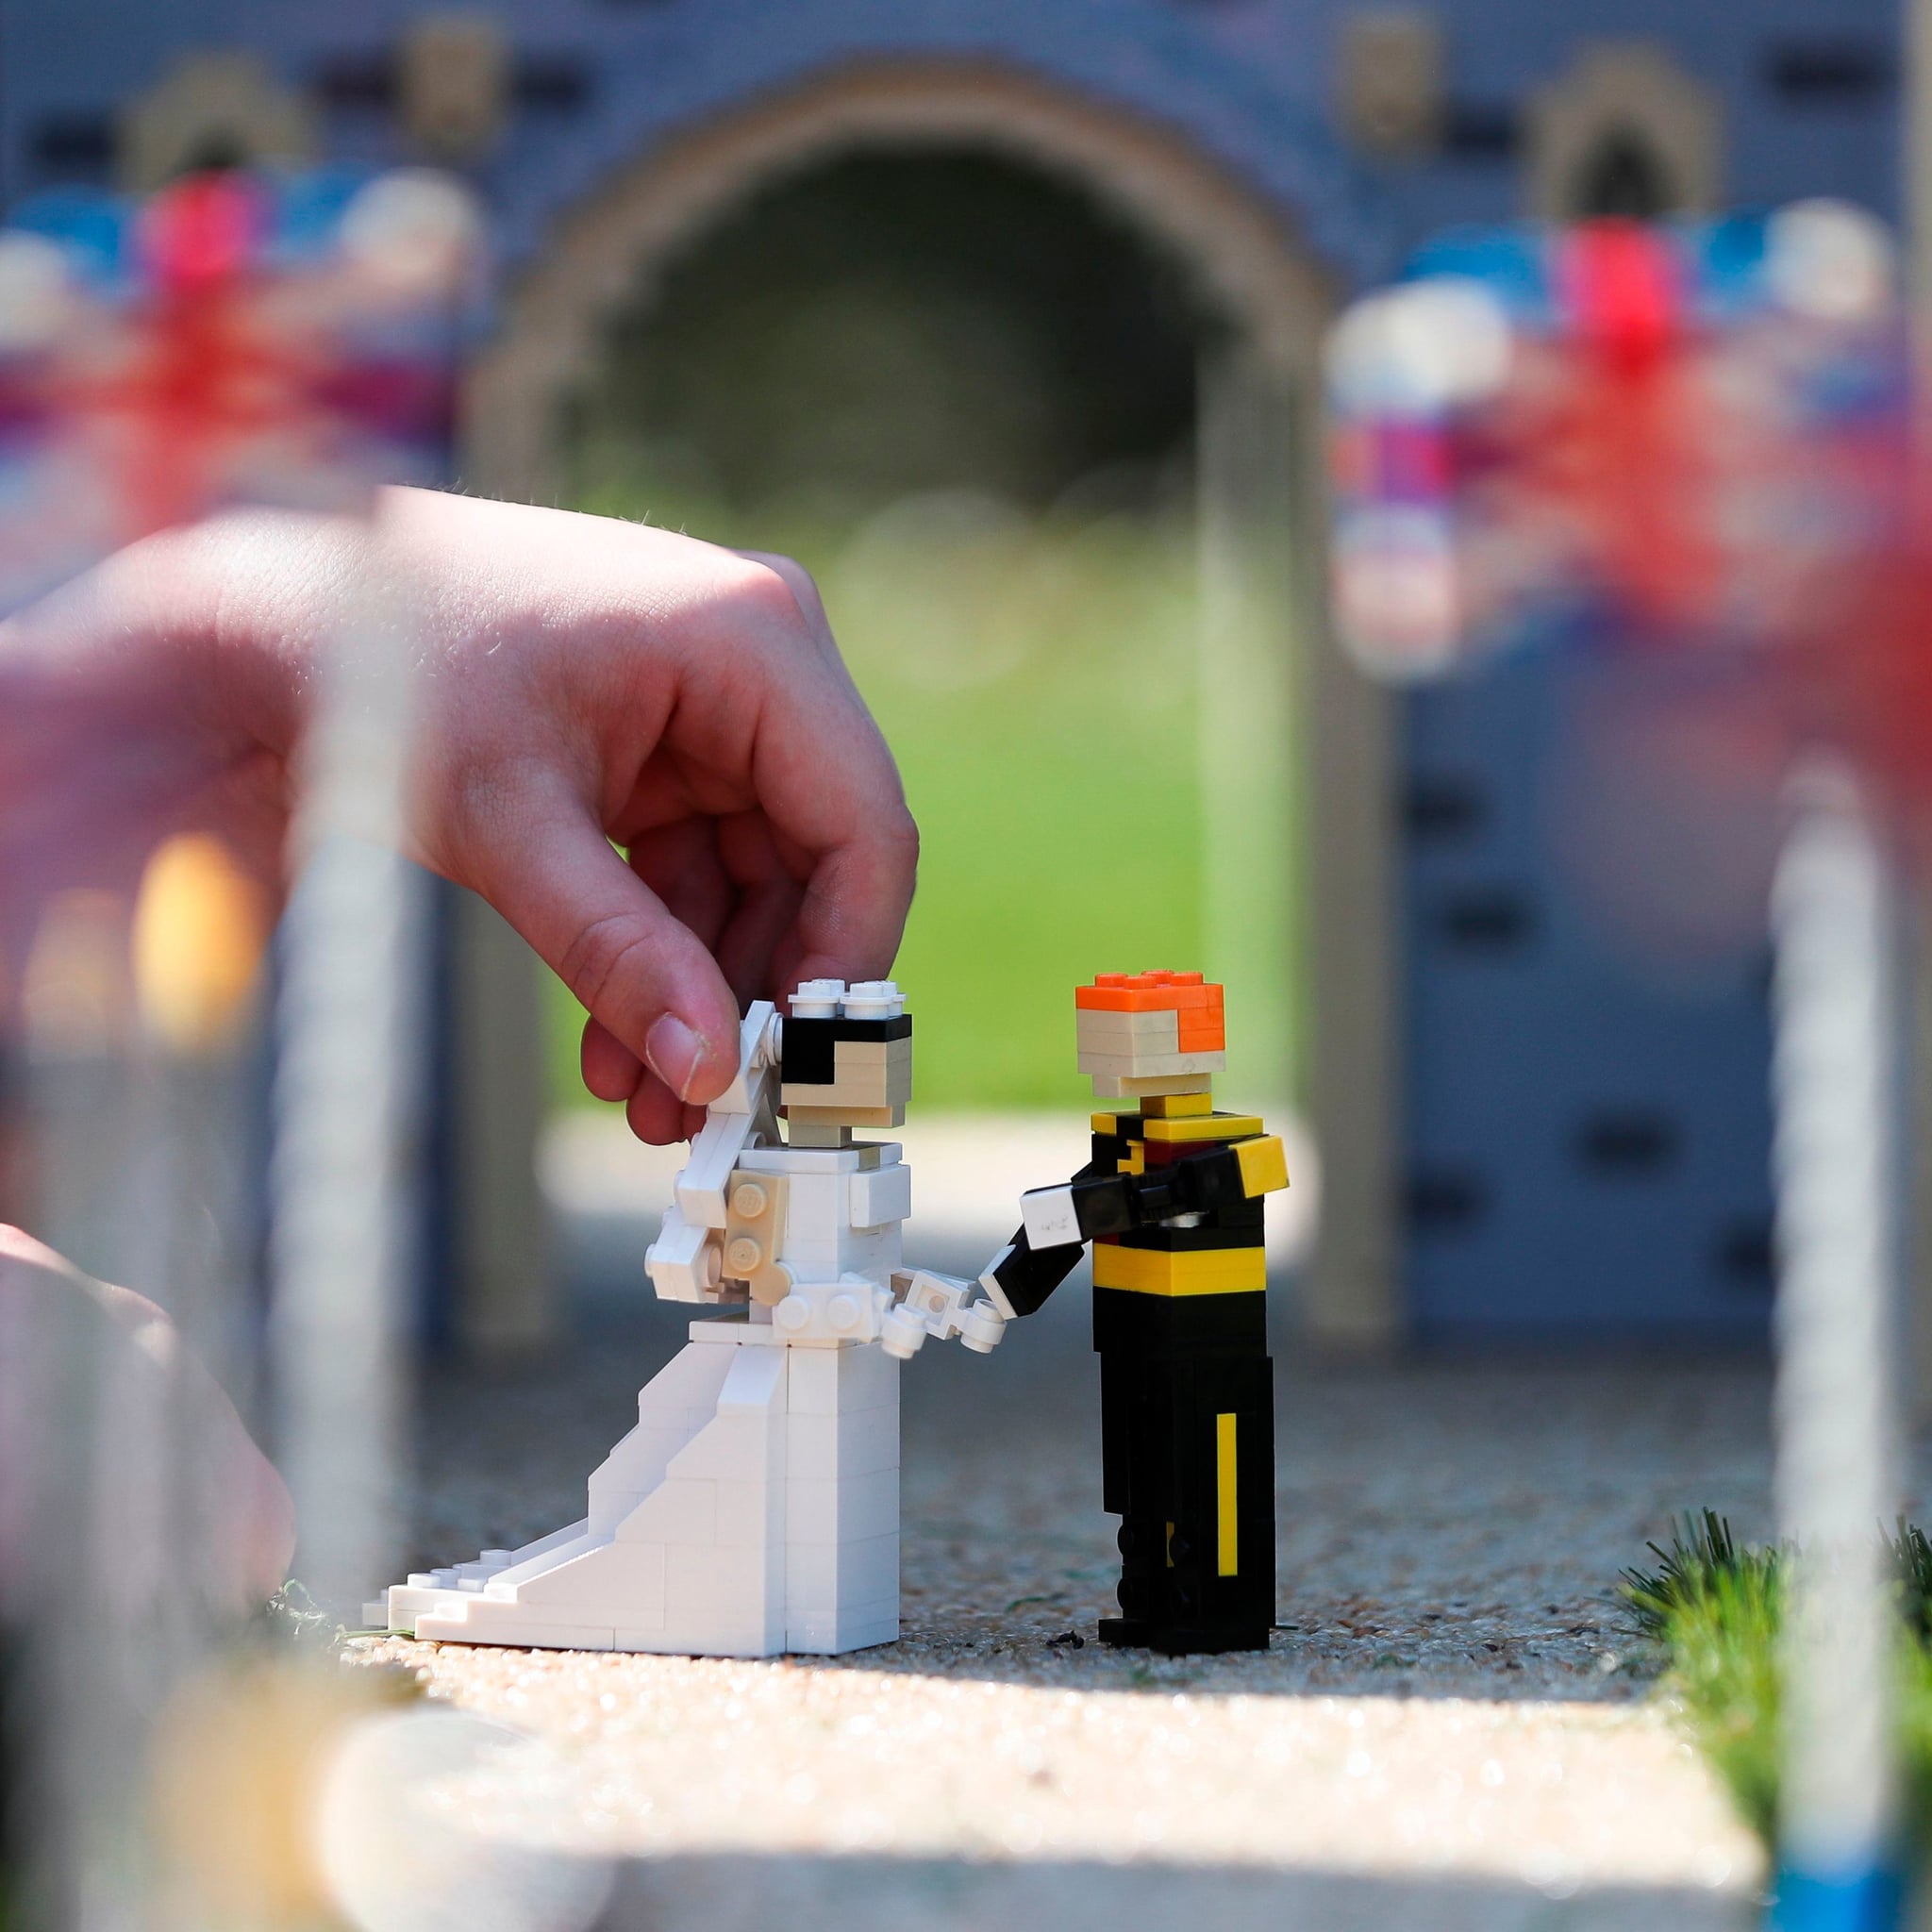 jul forsætlig skat Legoland's Royal Wedding Lego Diorama May 2018 | POPSUGAR News